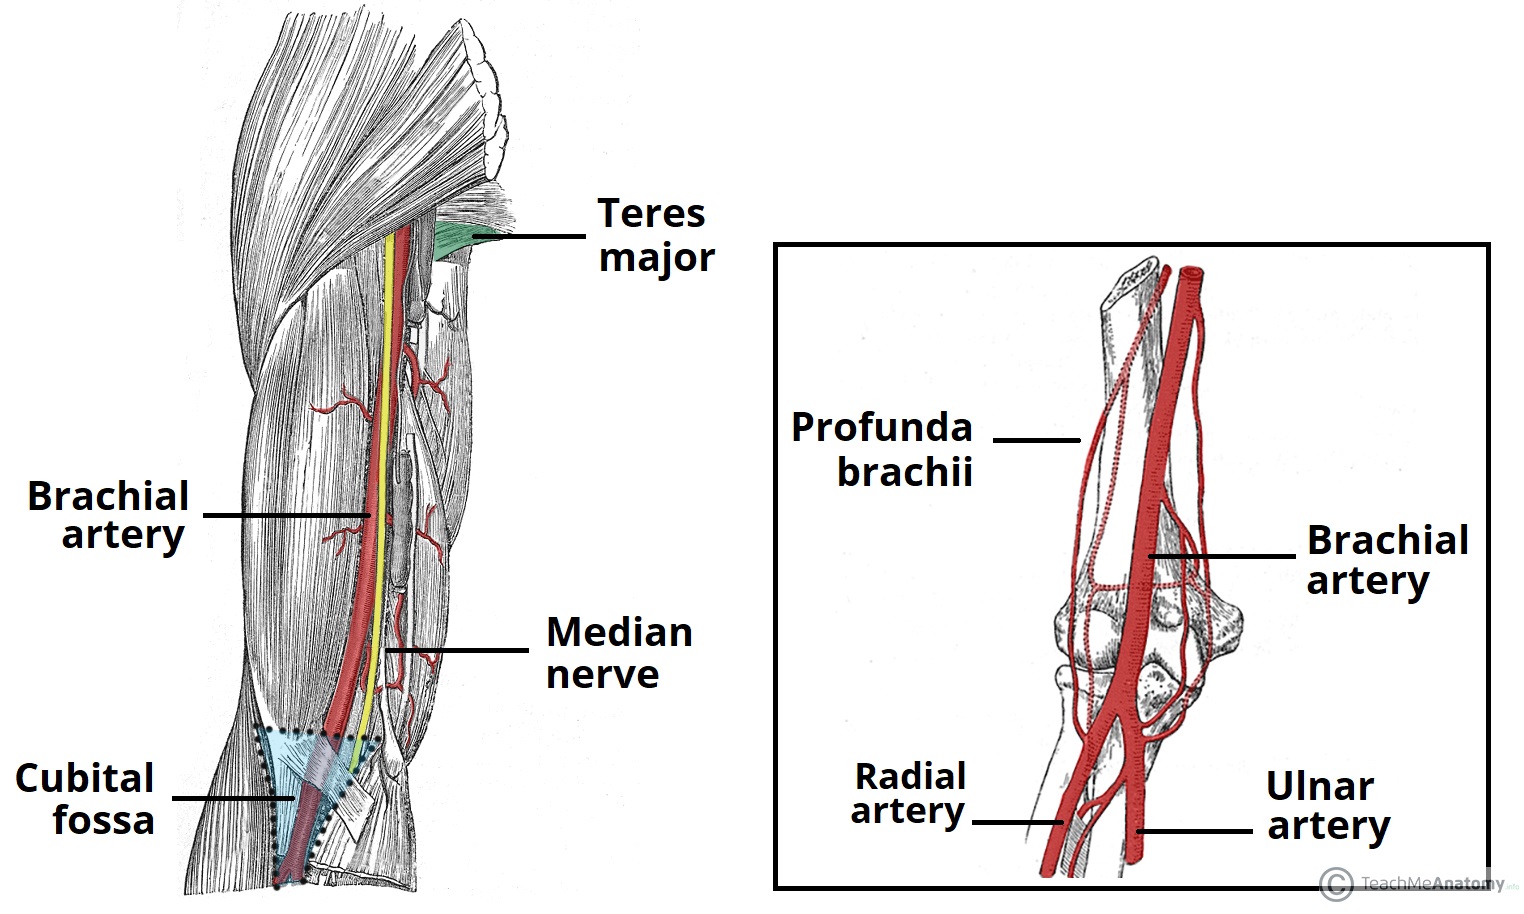 Muscles of the Upper Limb - TeachMeAnatomy